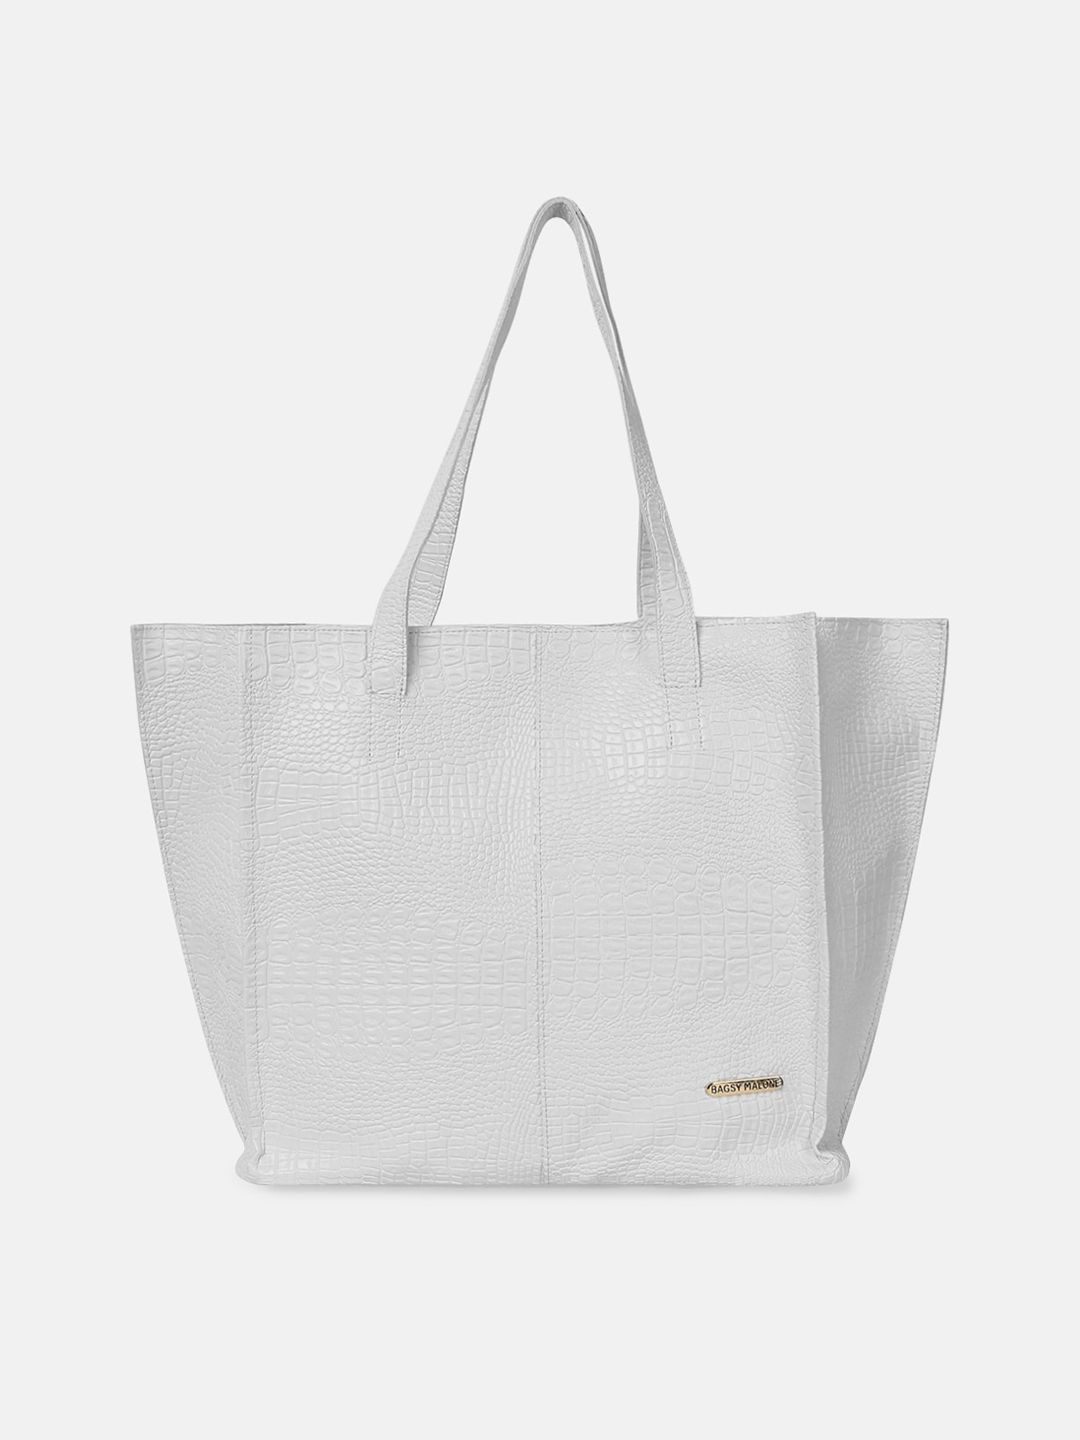 Bagsy Malone White PU Oversized Shopper Tote Bag Price in India